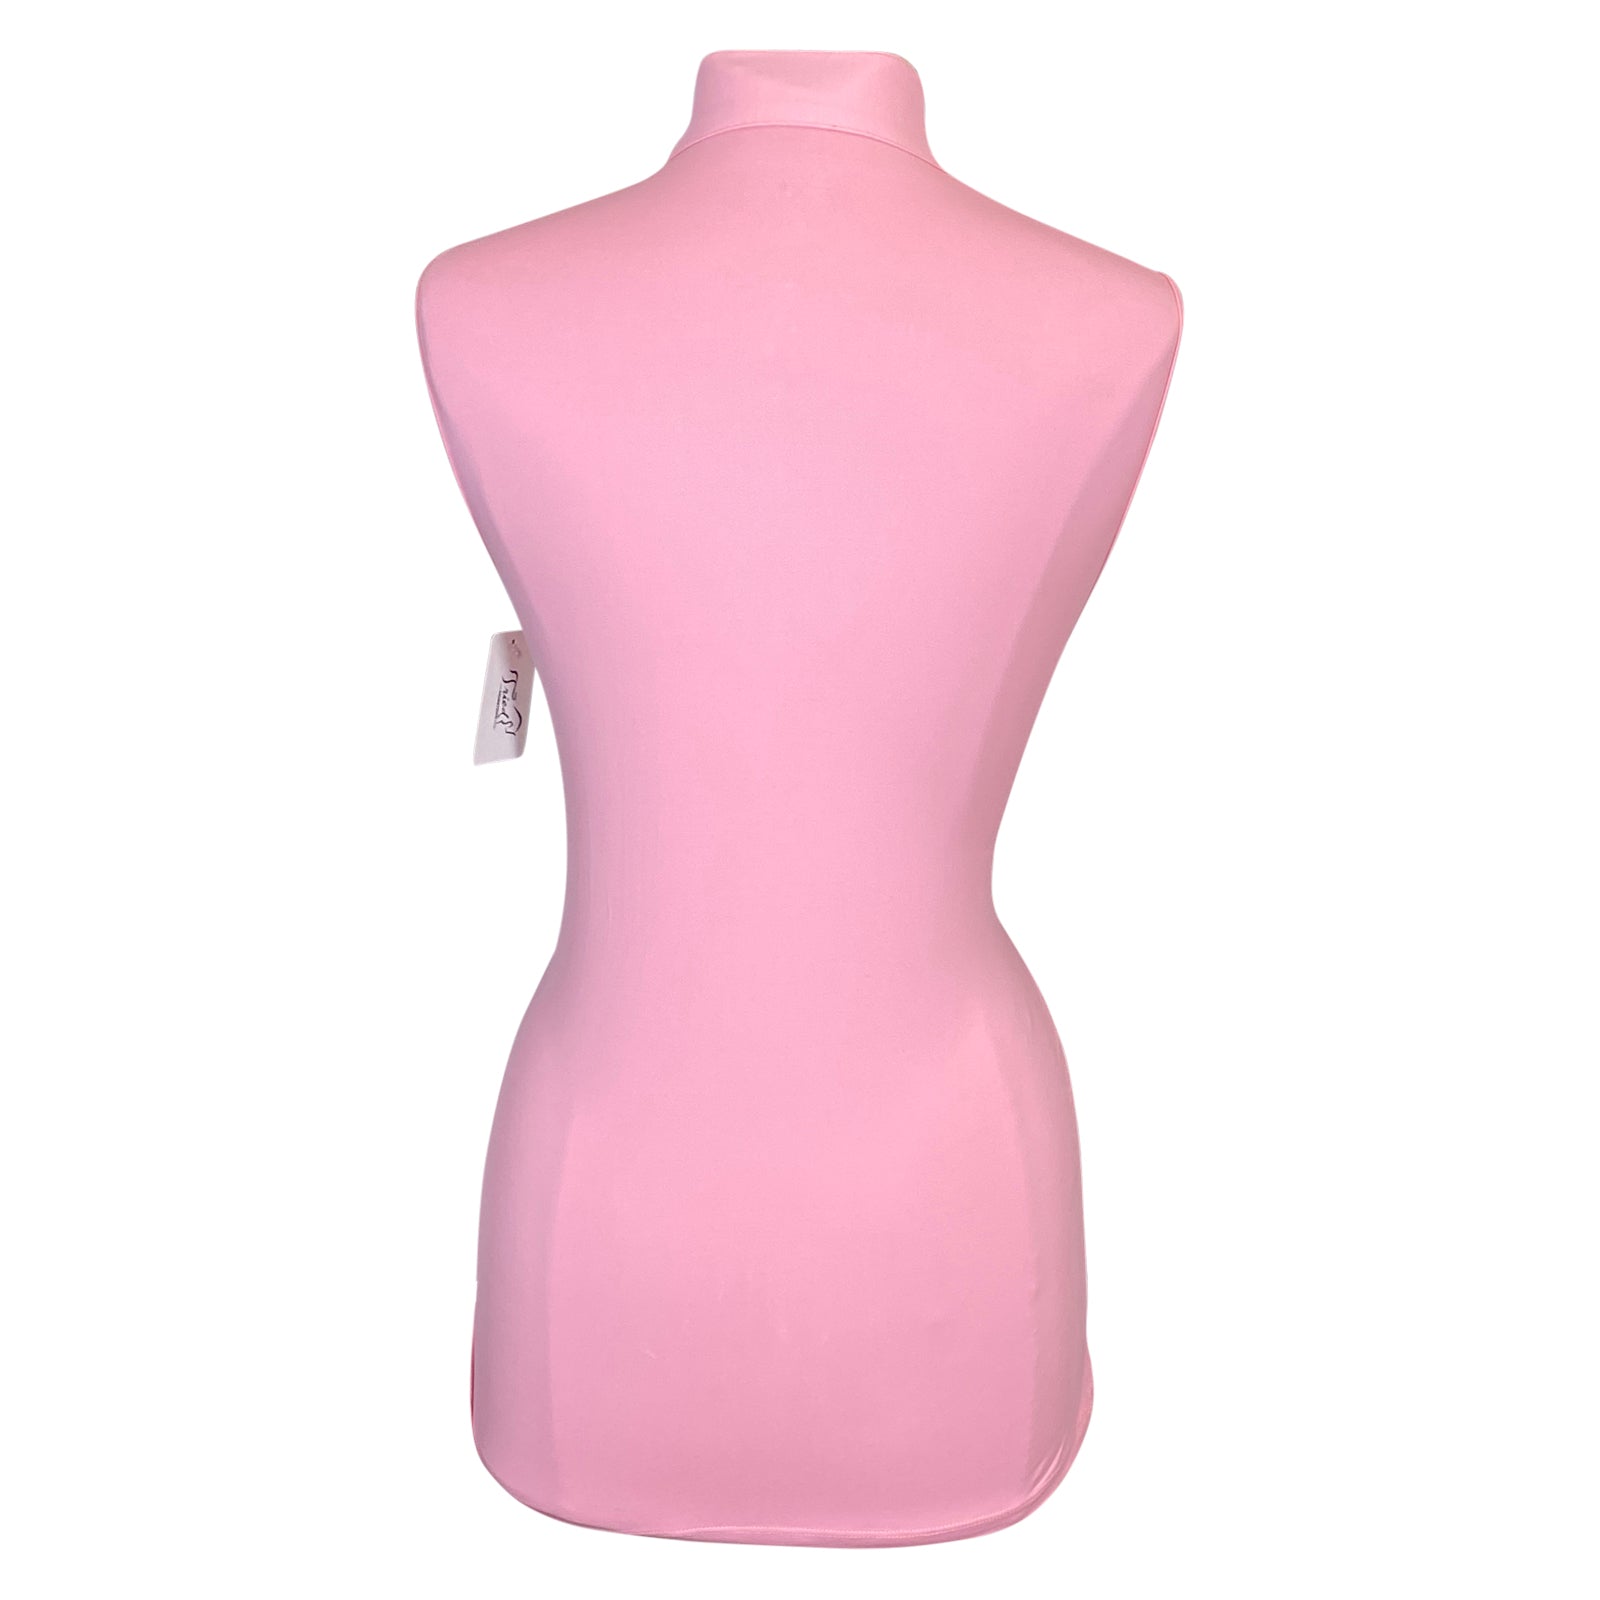 Tailored Sportsman Ice Fil Shirt Sleeveless in Flamingo - Women's Small